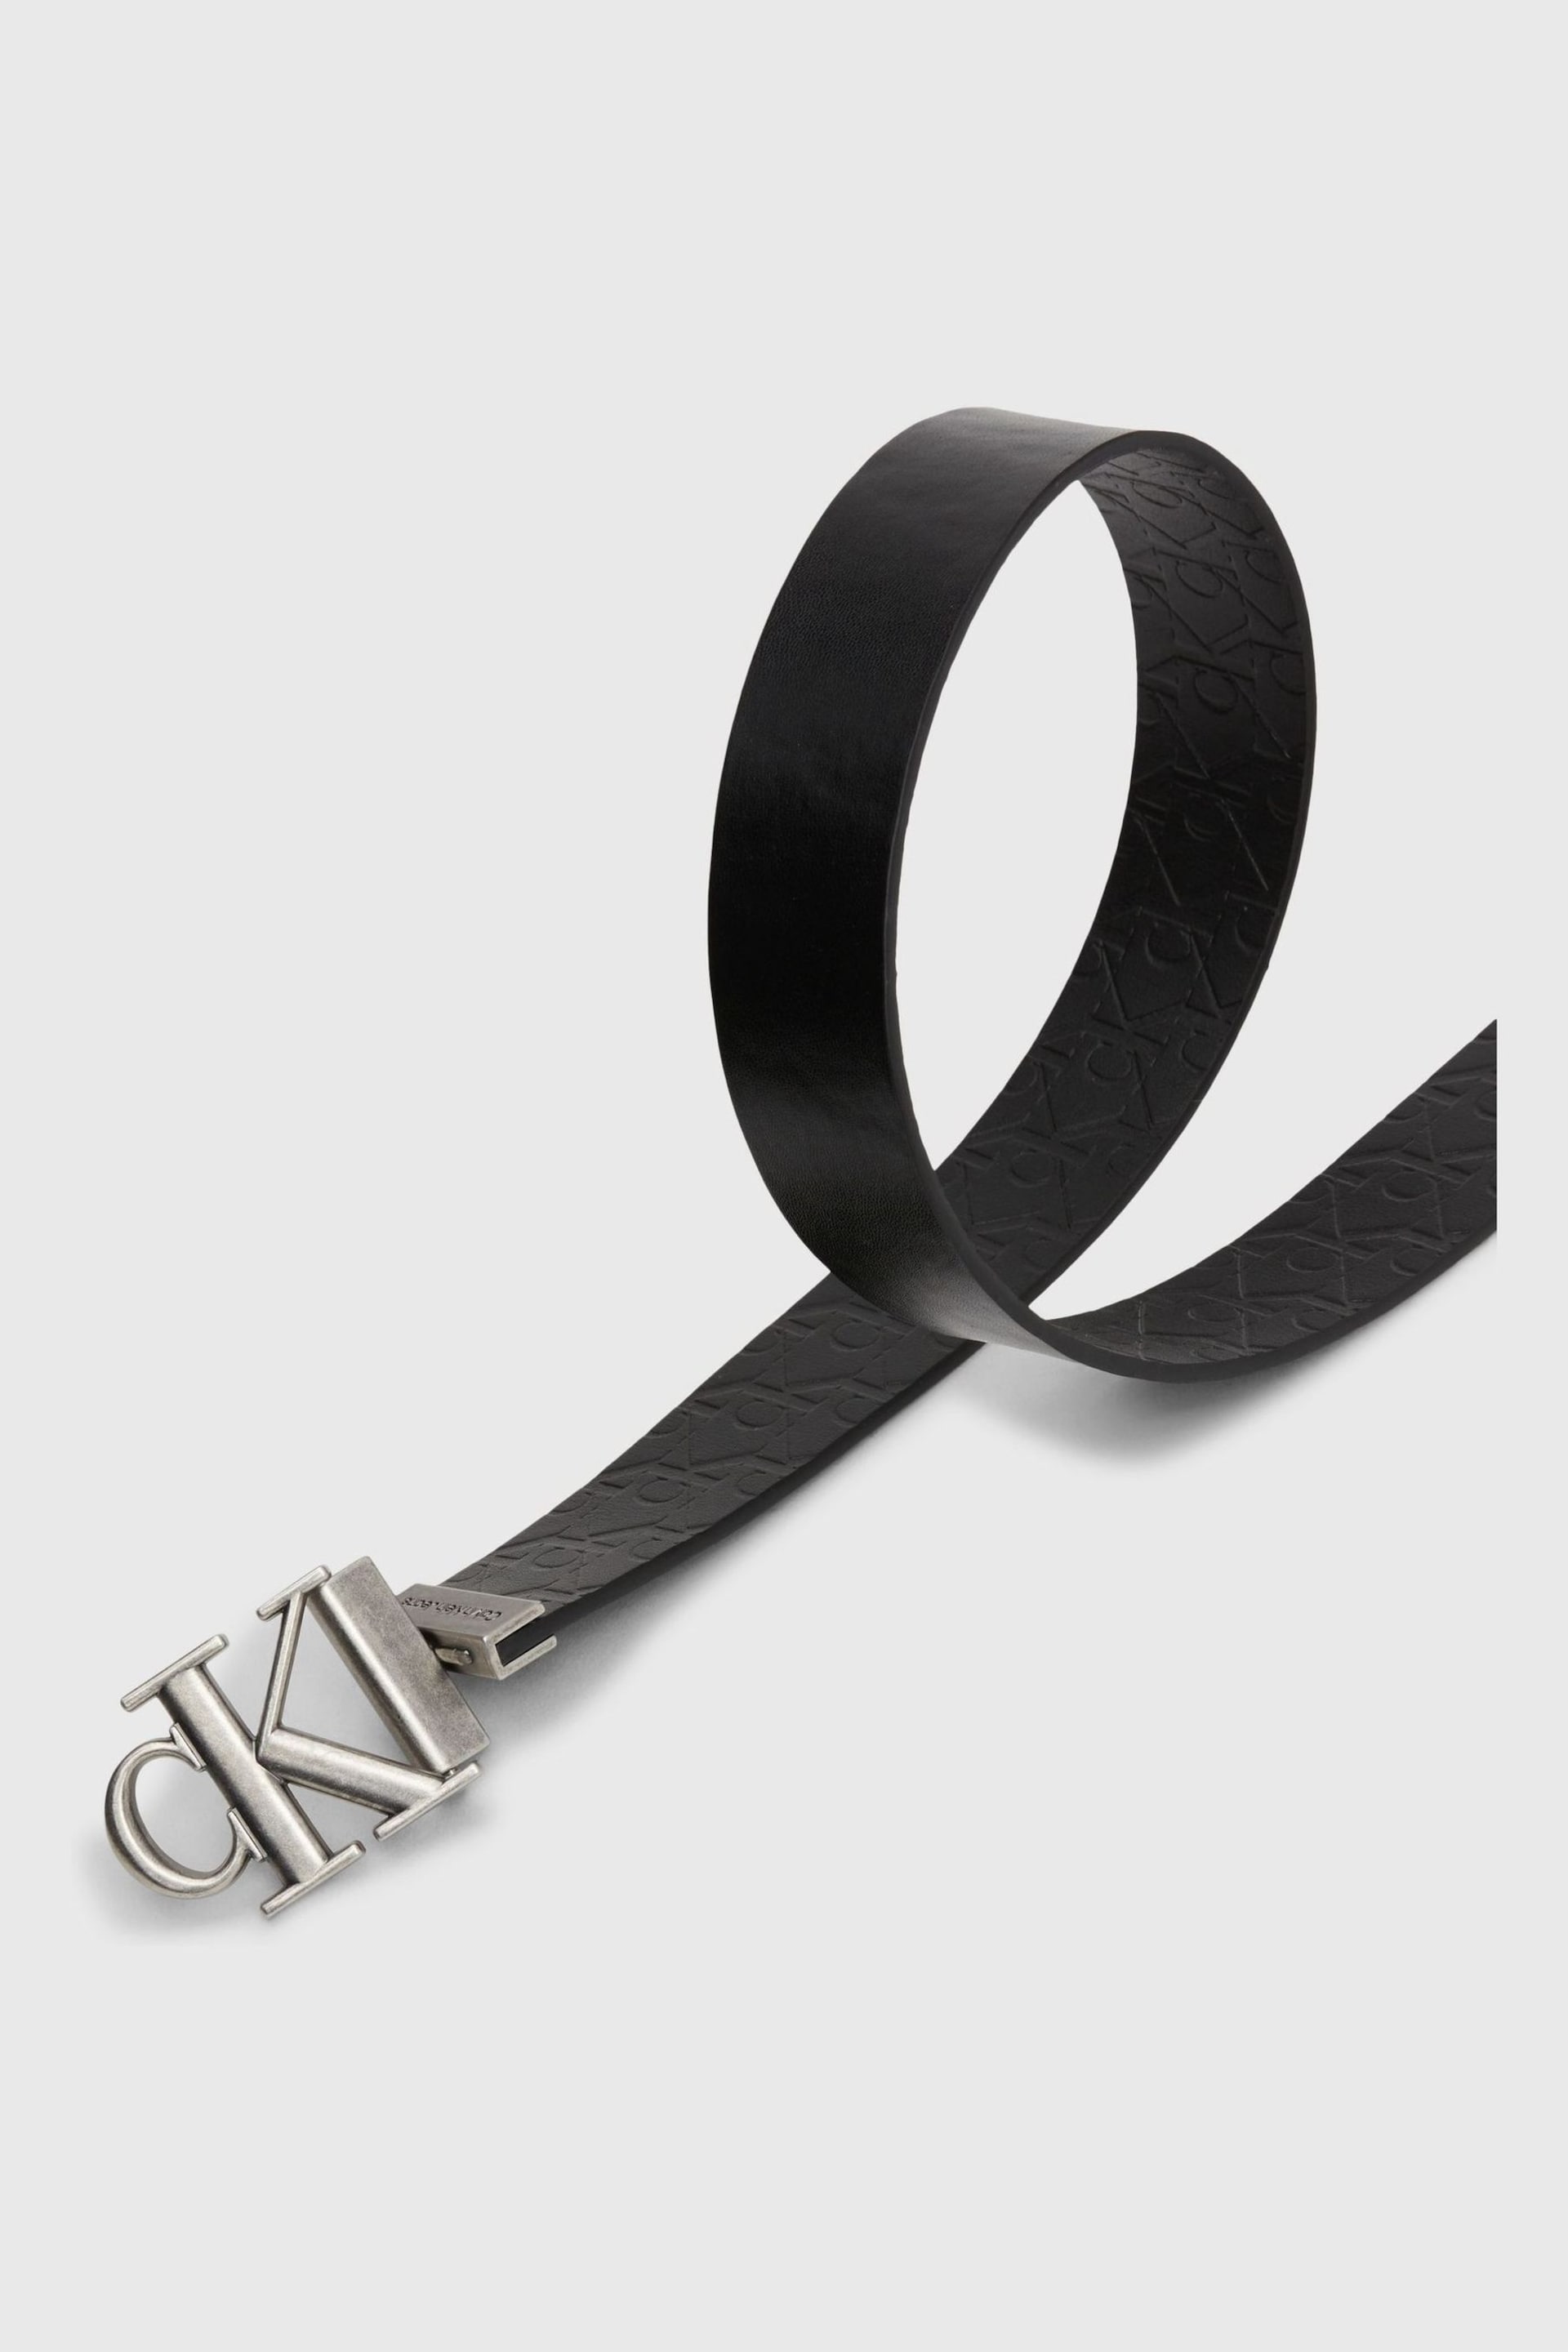 Calvin Klein Black Logo Belt - Image 2 of 4